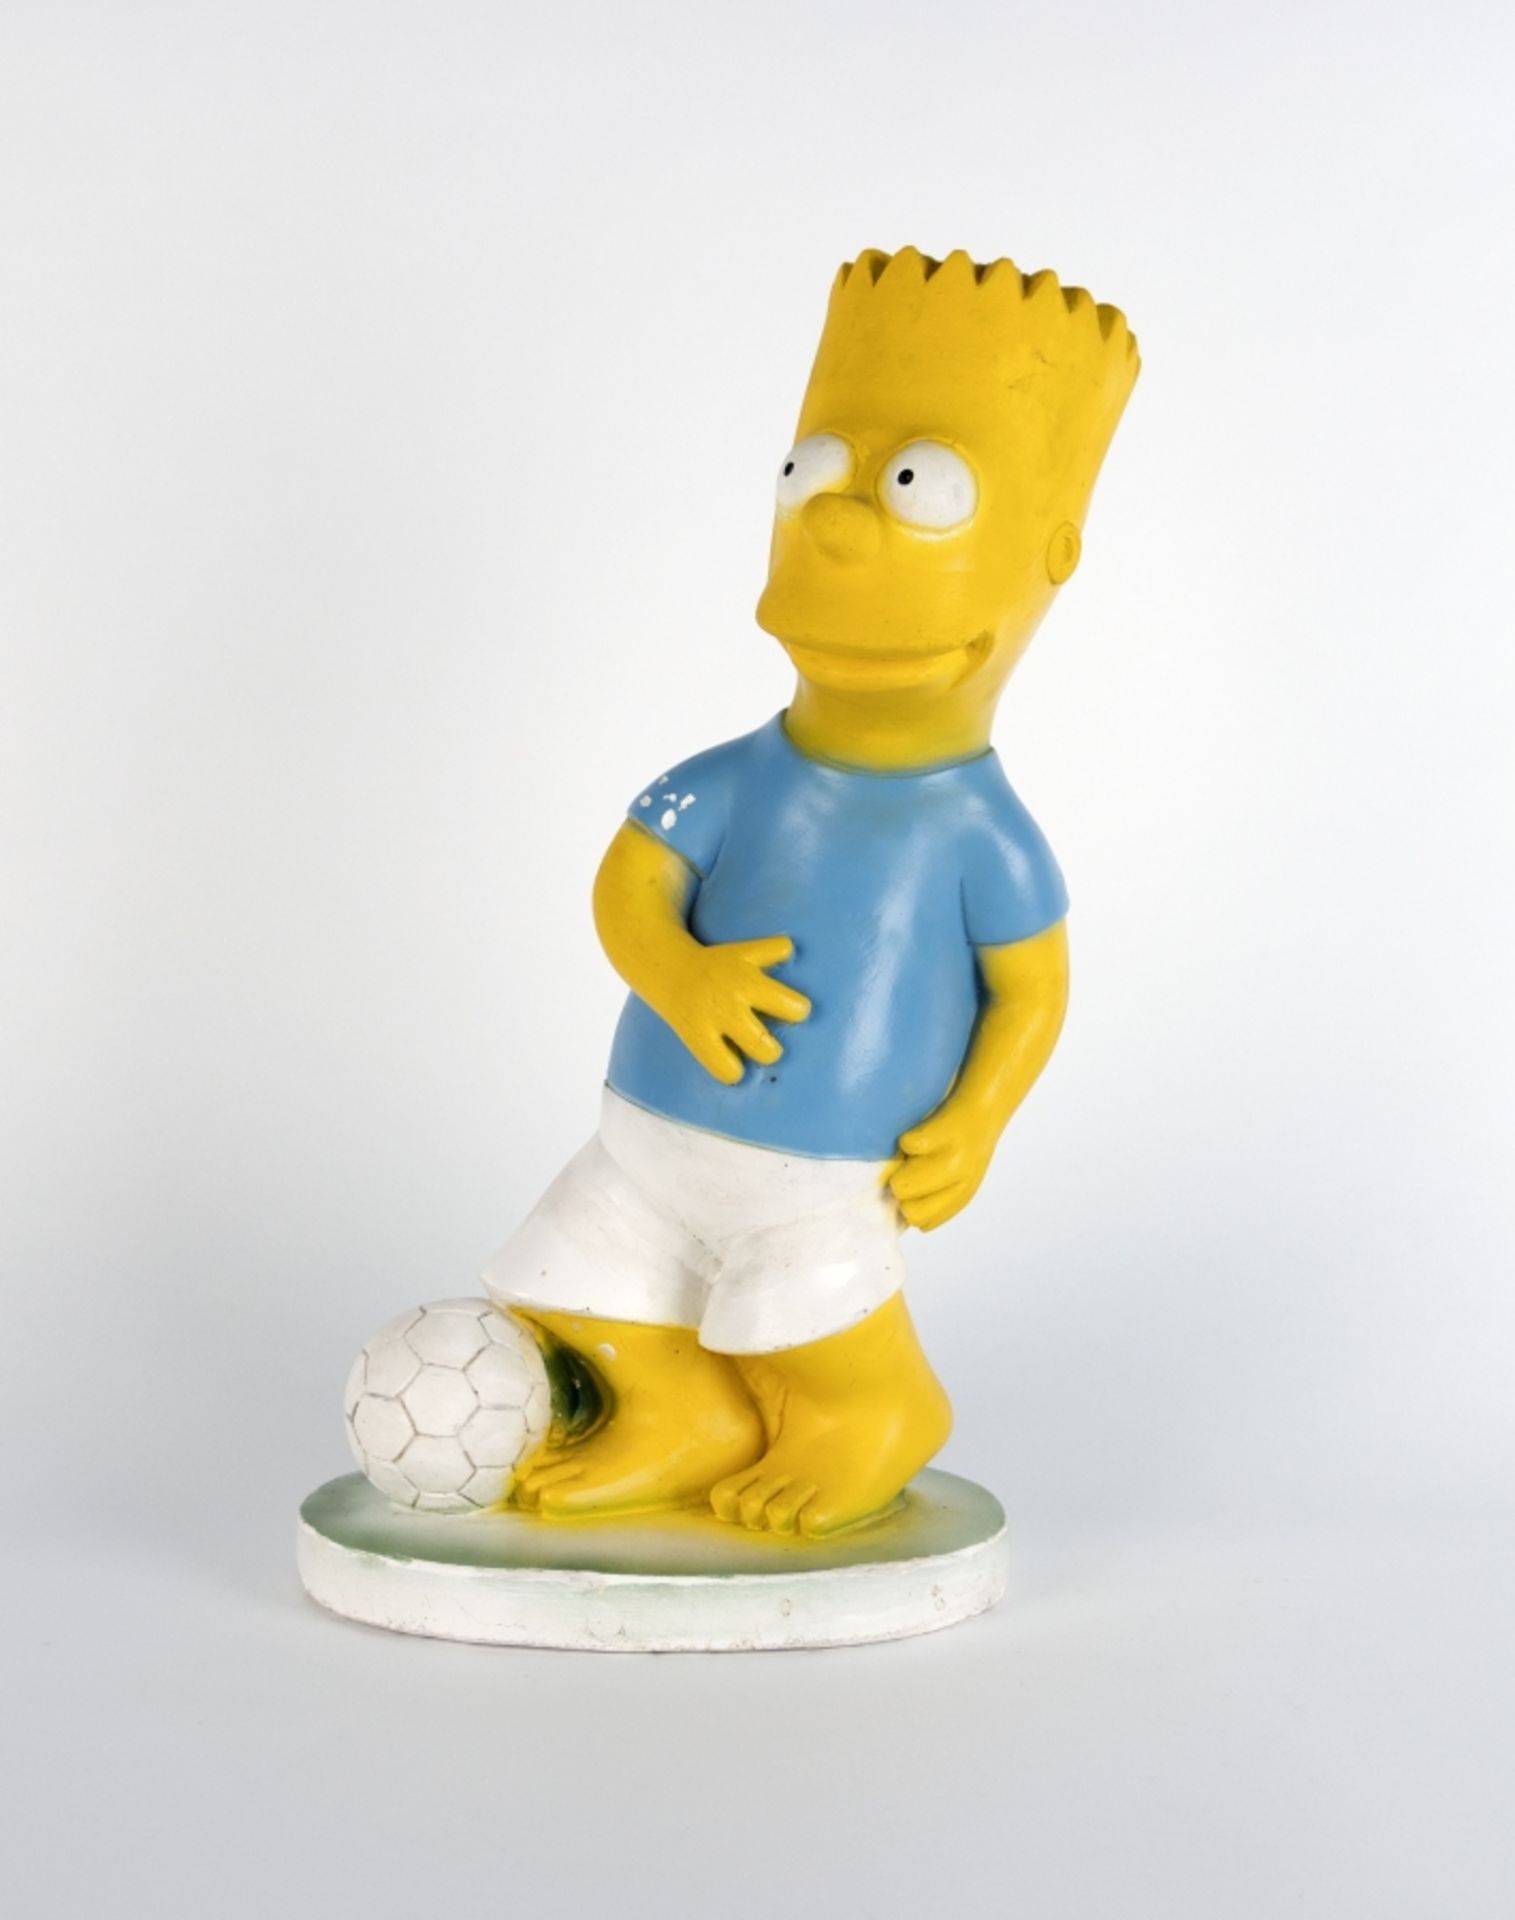 Groening, Matt: Bart Simpson - Image 2 of 2